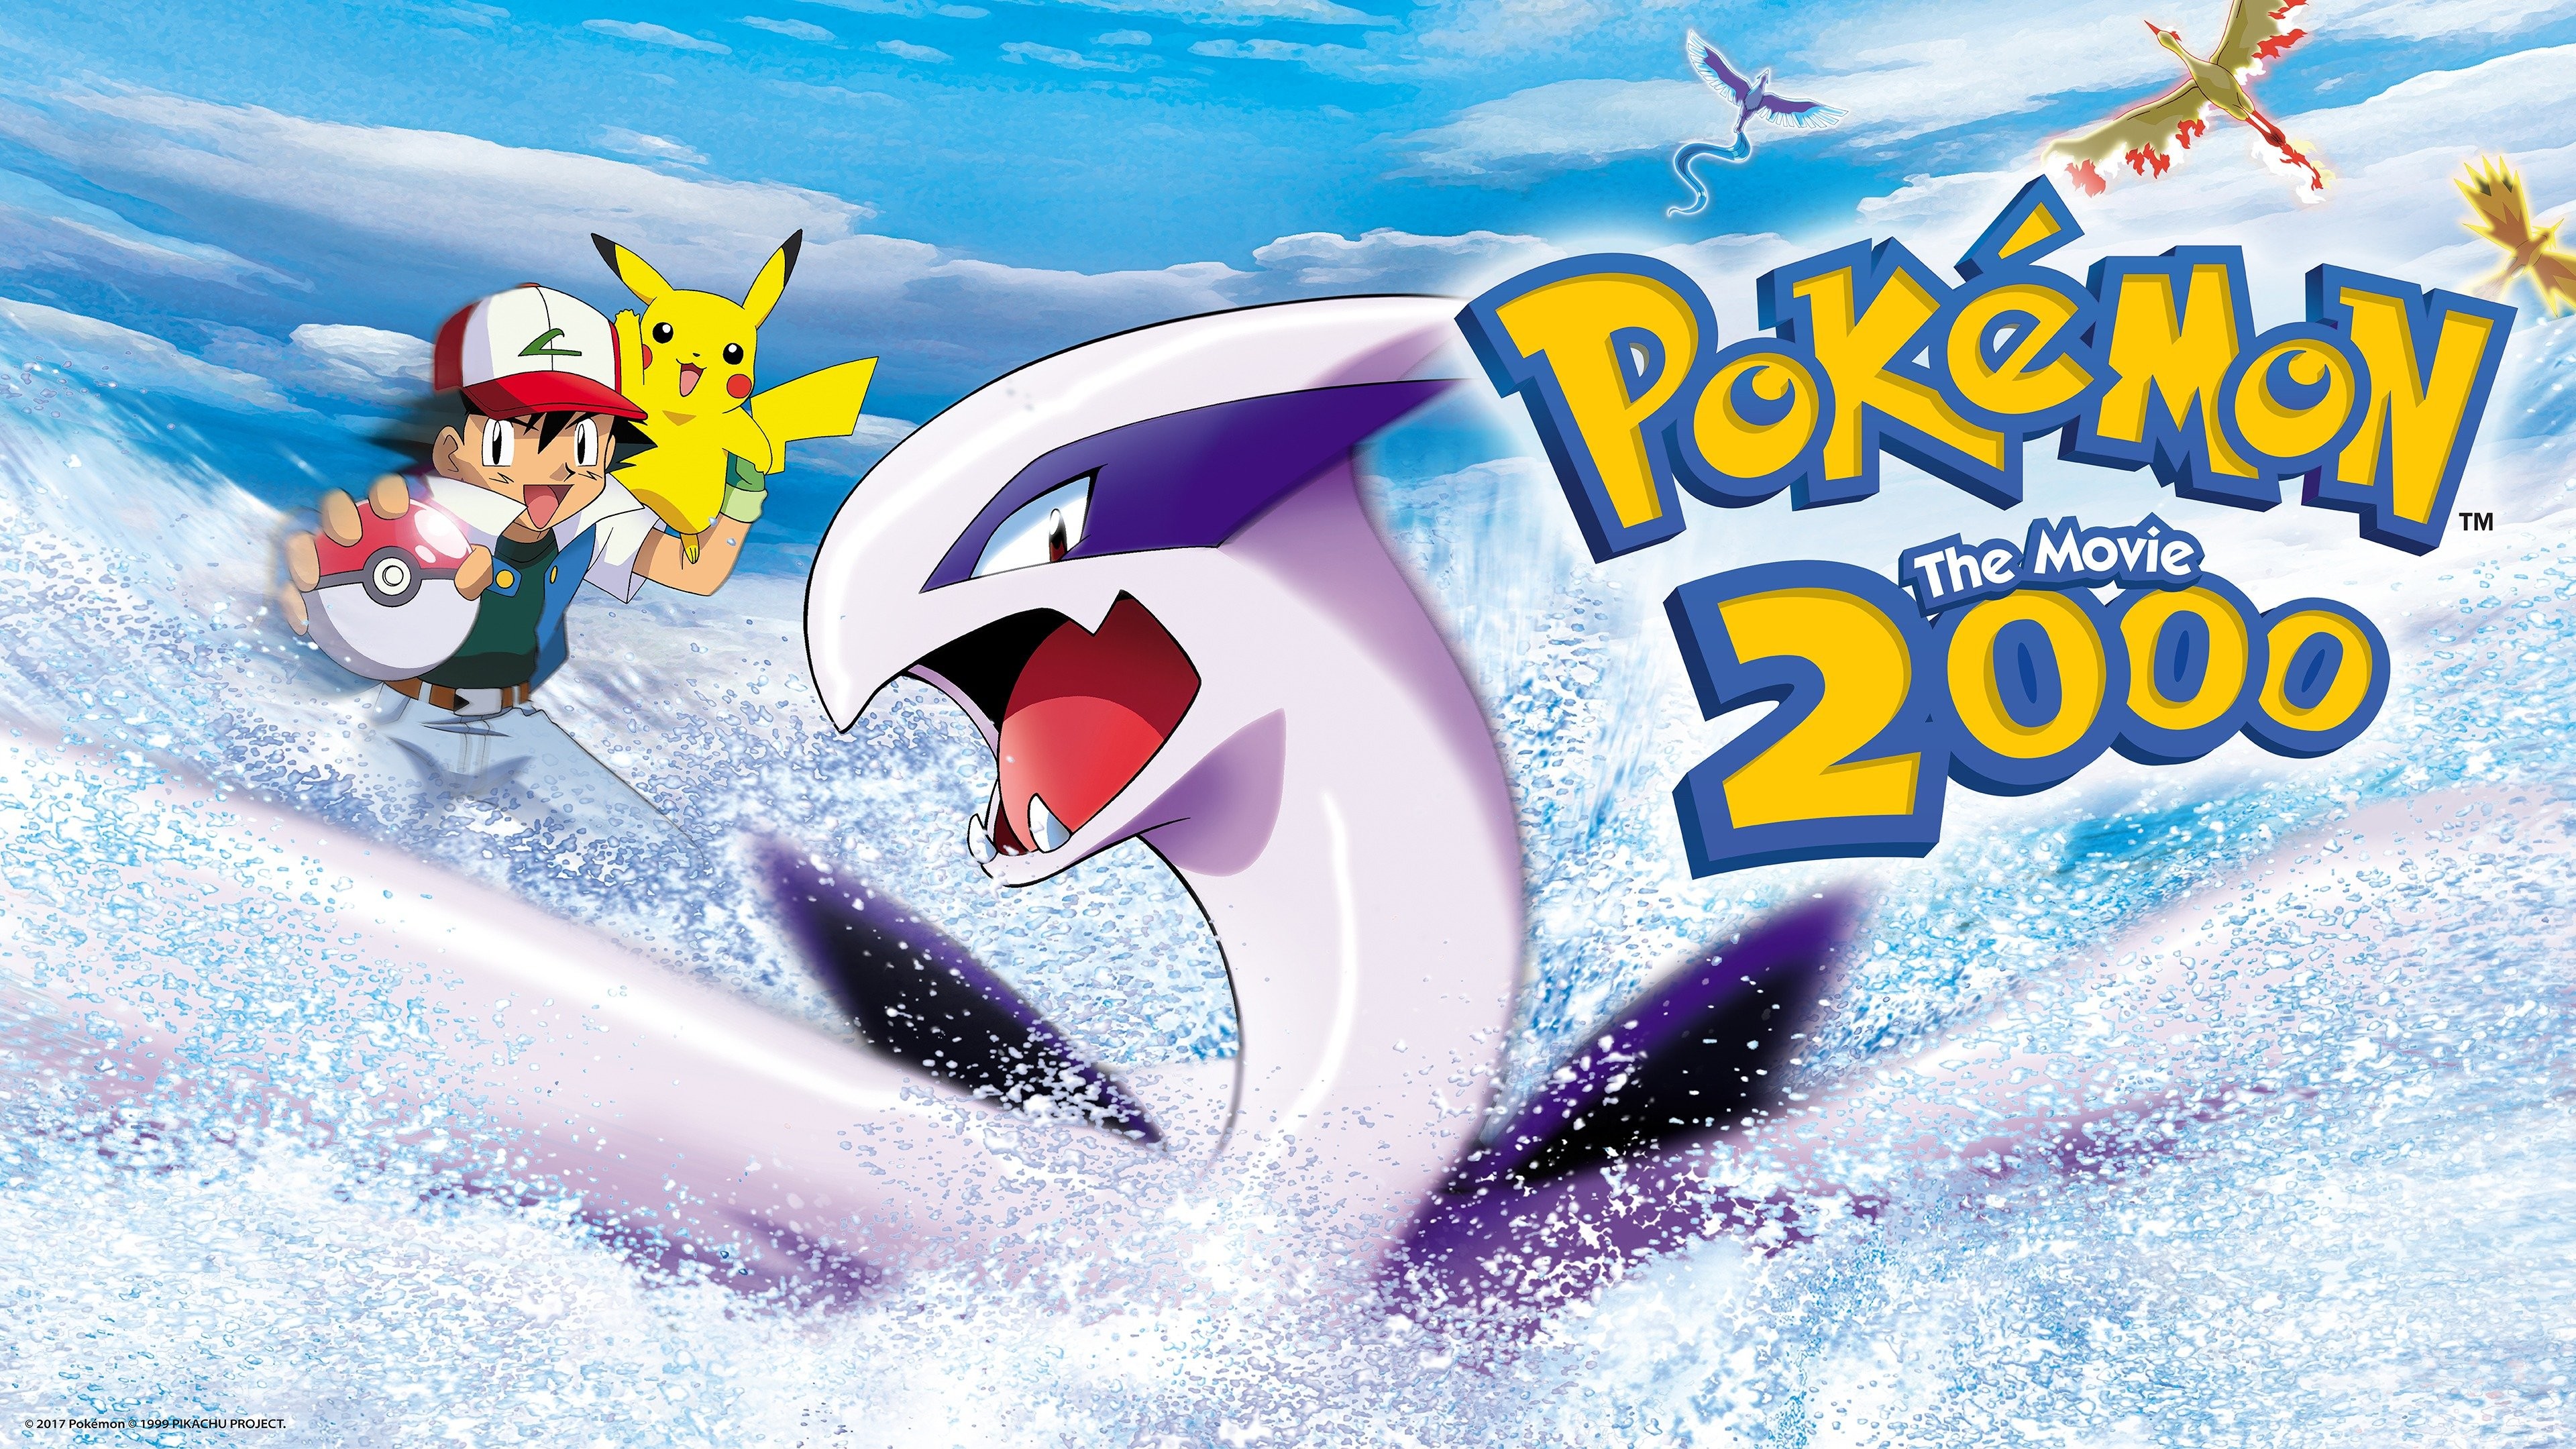 Pokémon: The Movie 2000 Adventure (found browser-based online game